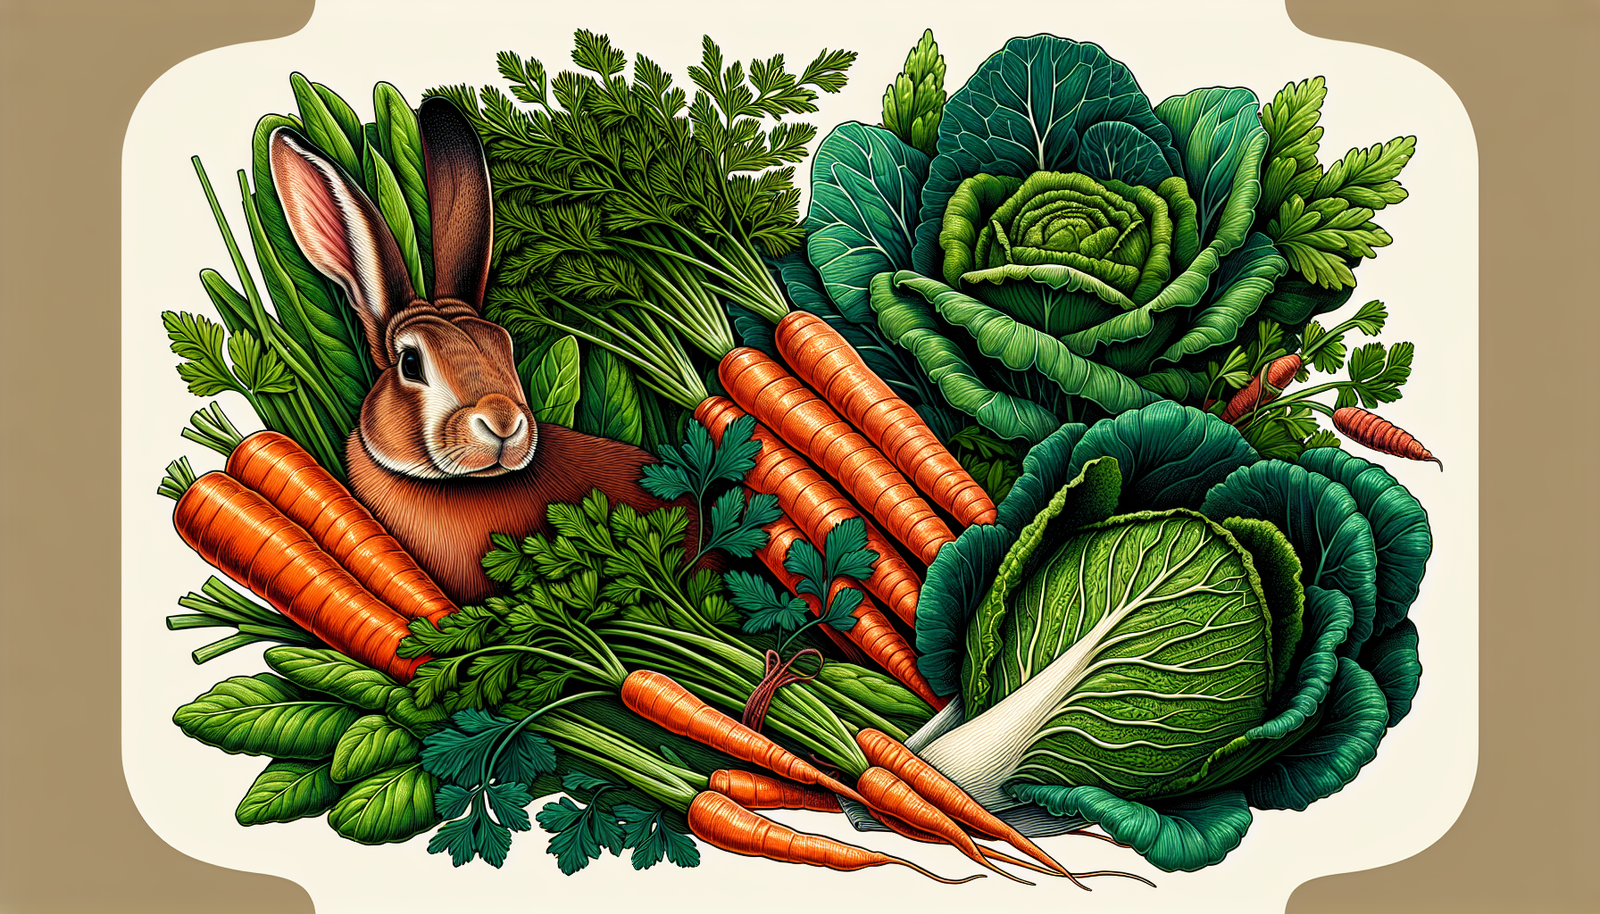 Illustration of fresh vegetables and leafy greens